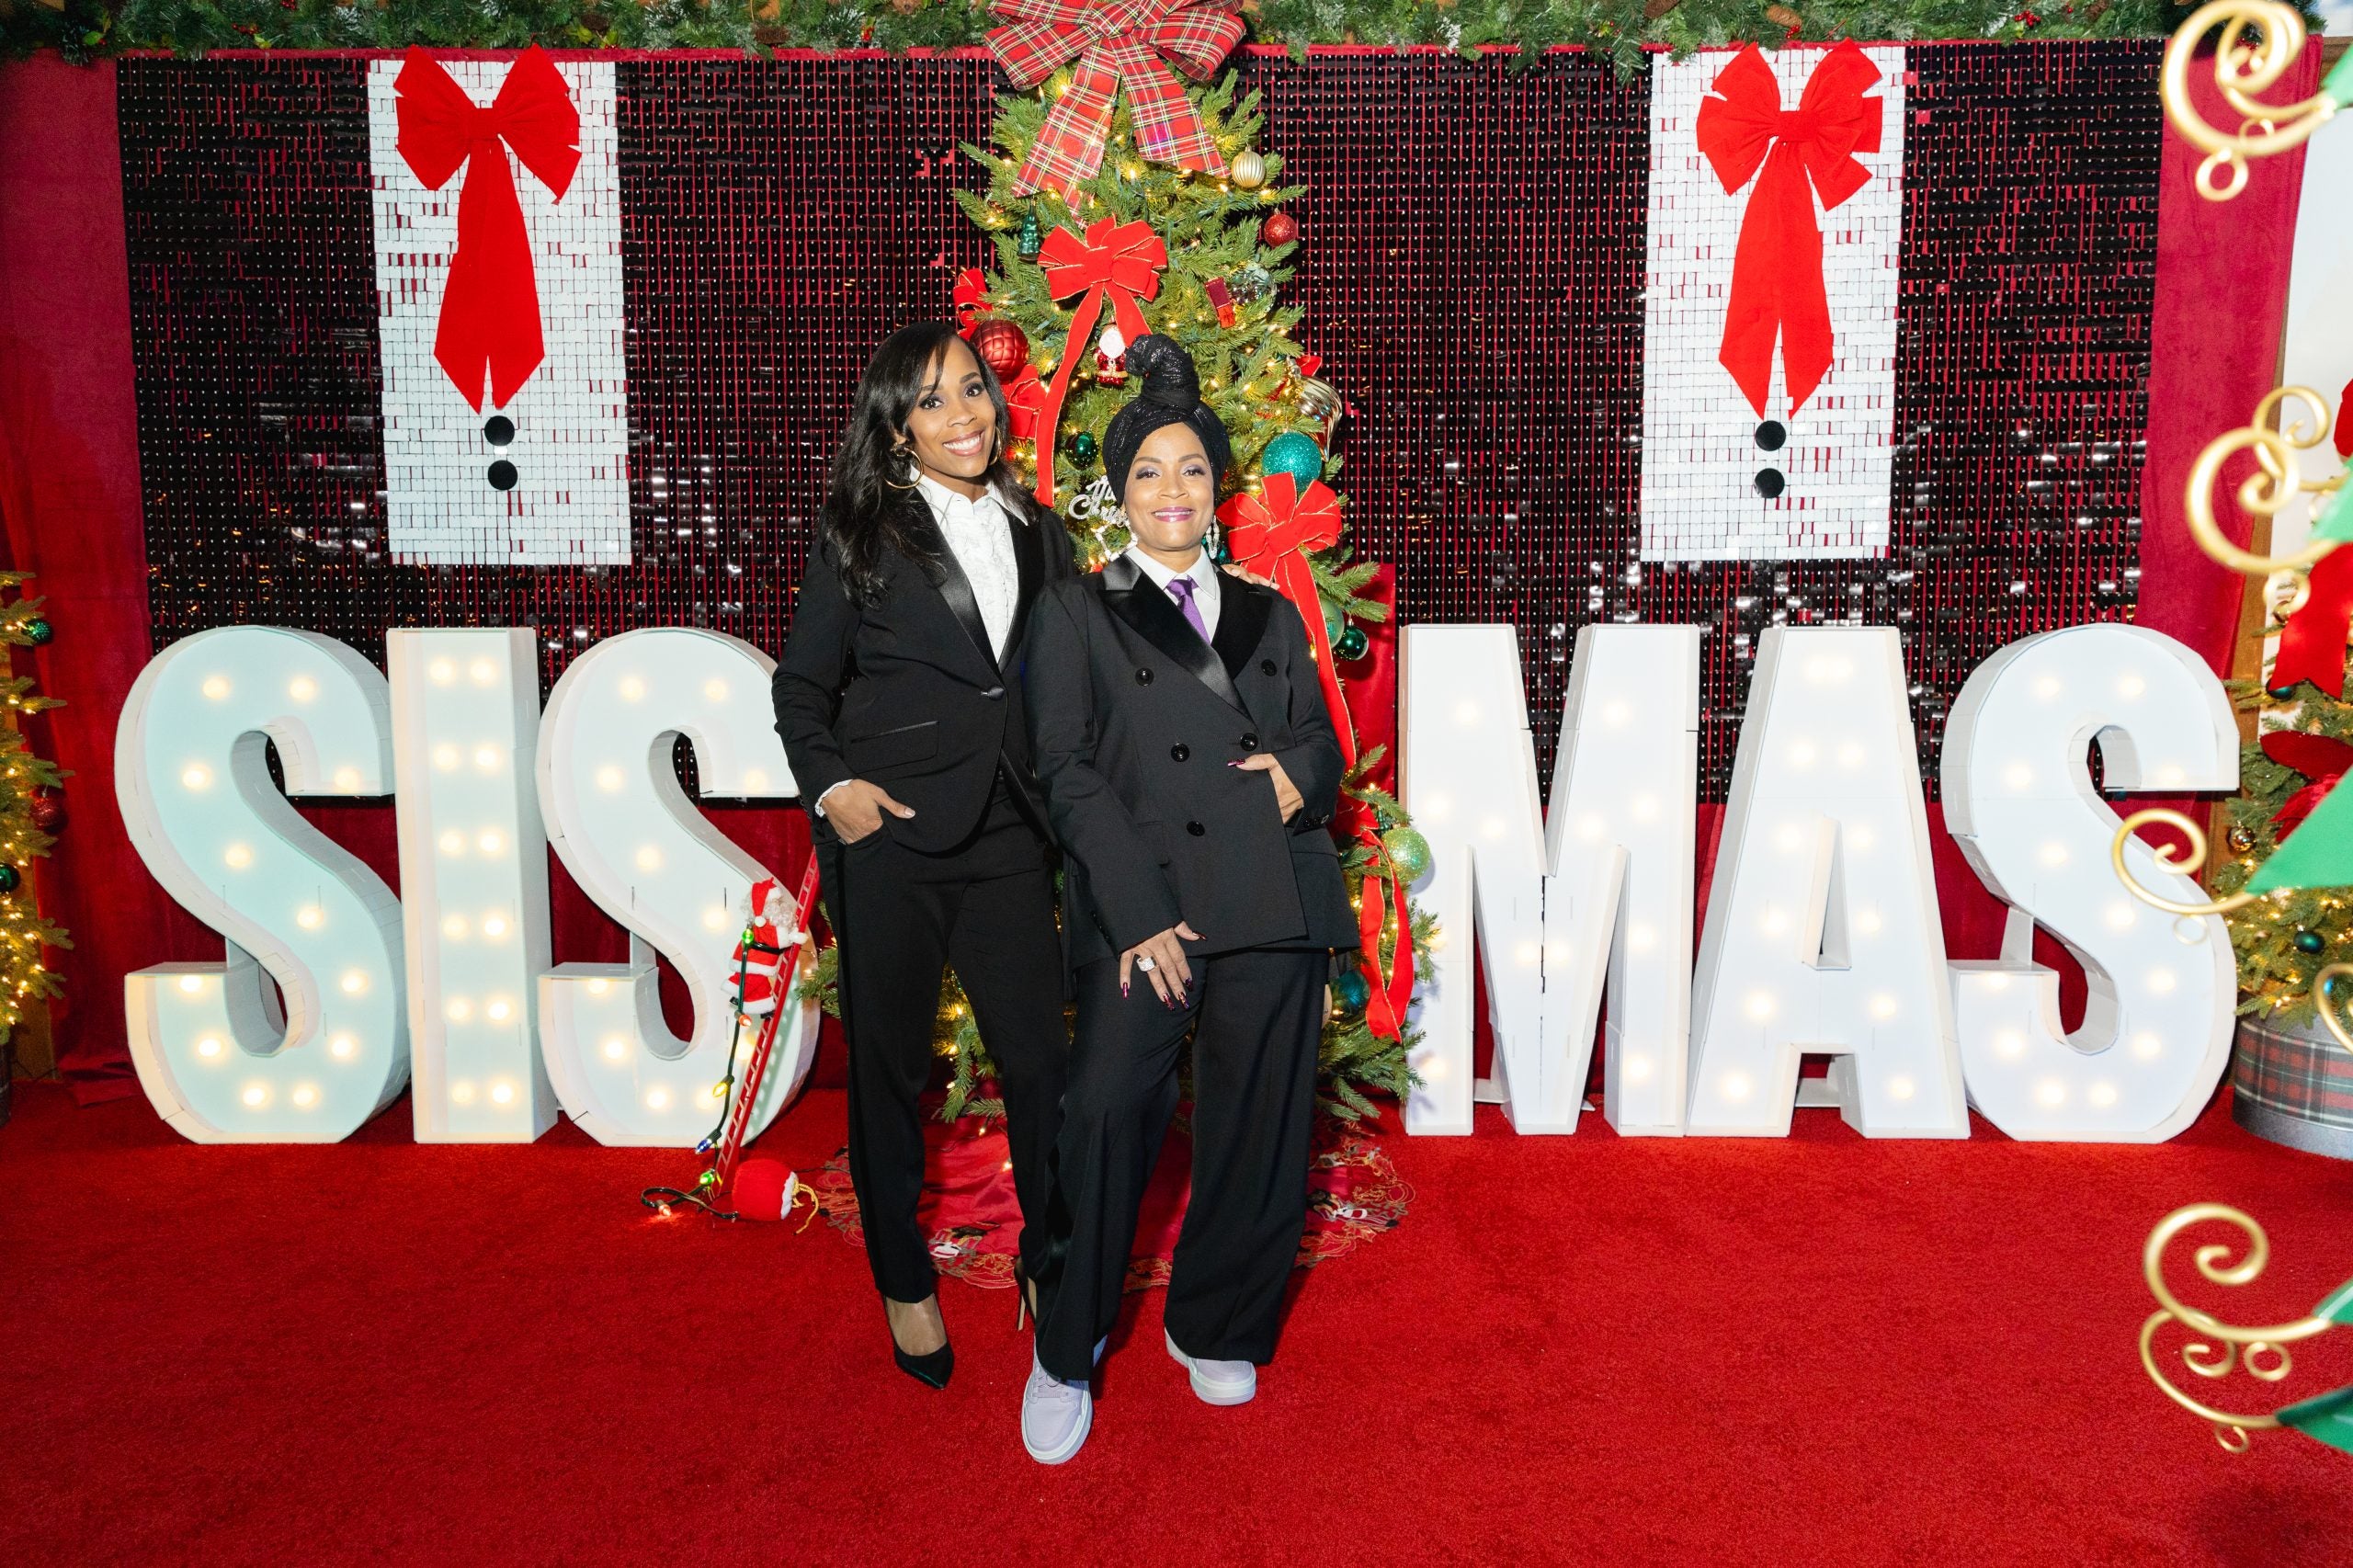 Exclusive: Inside LL Cool J’s Wife Simone Smith's Annual 'SISMAS' Event Celebrating Sisterhood